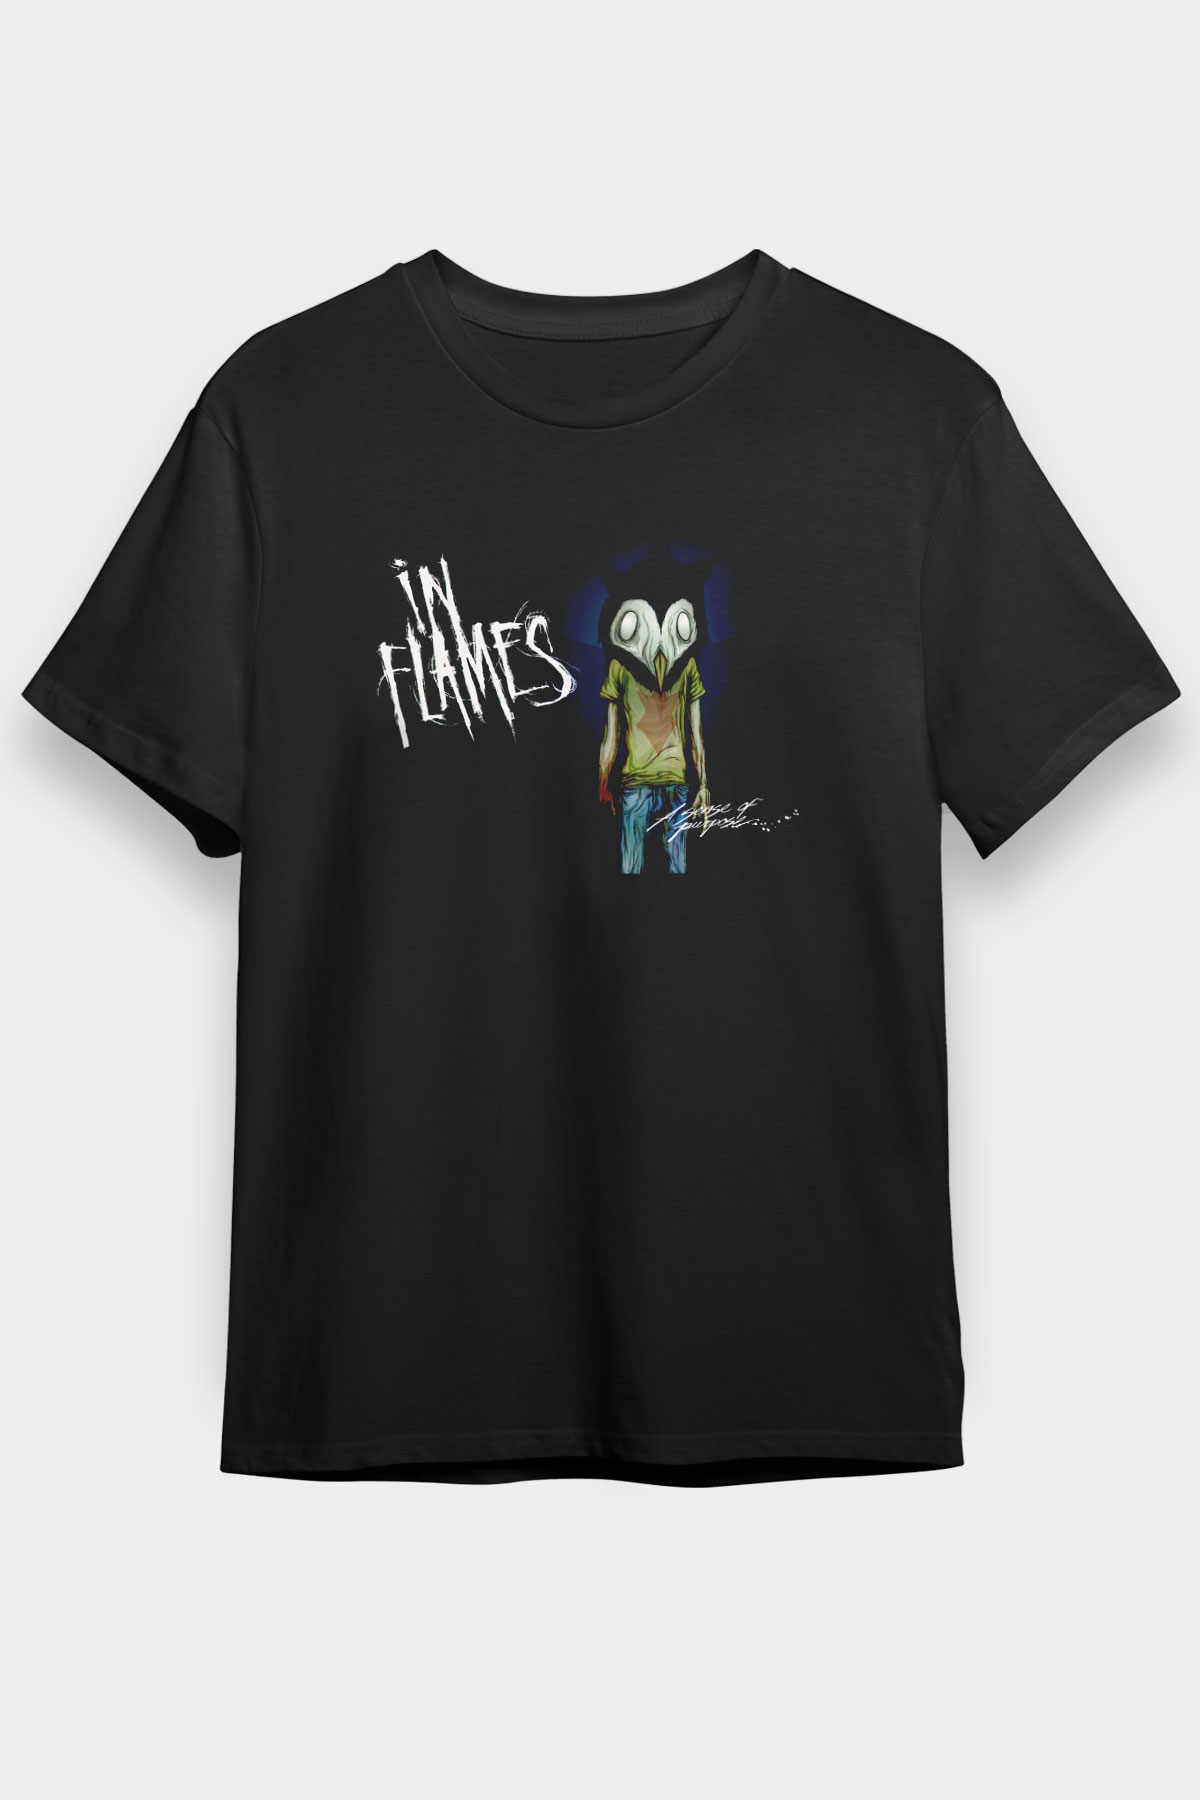 In Flames T shirt,Music Band,Unisex Tshirt 06